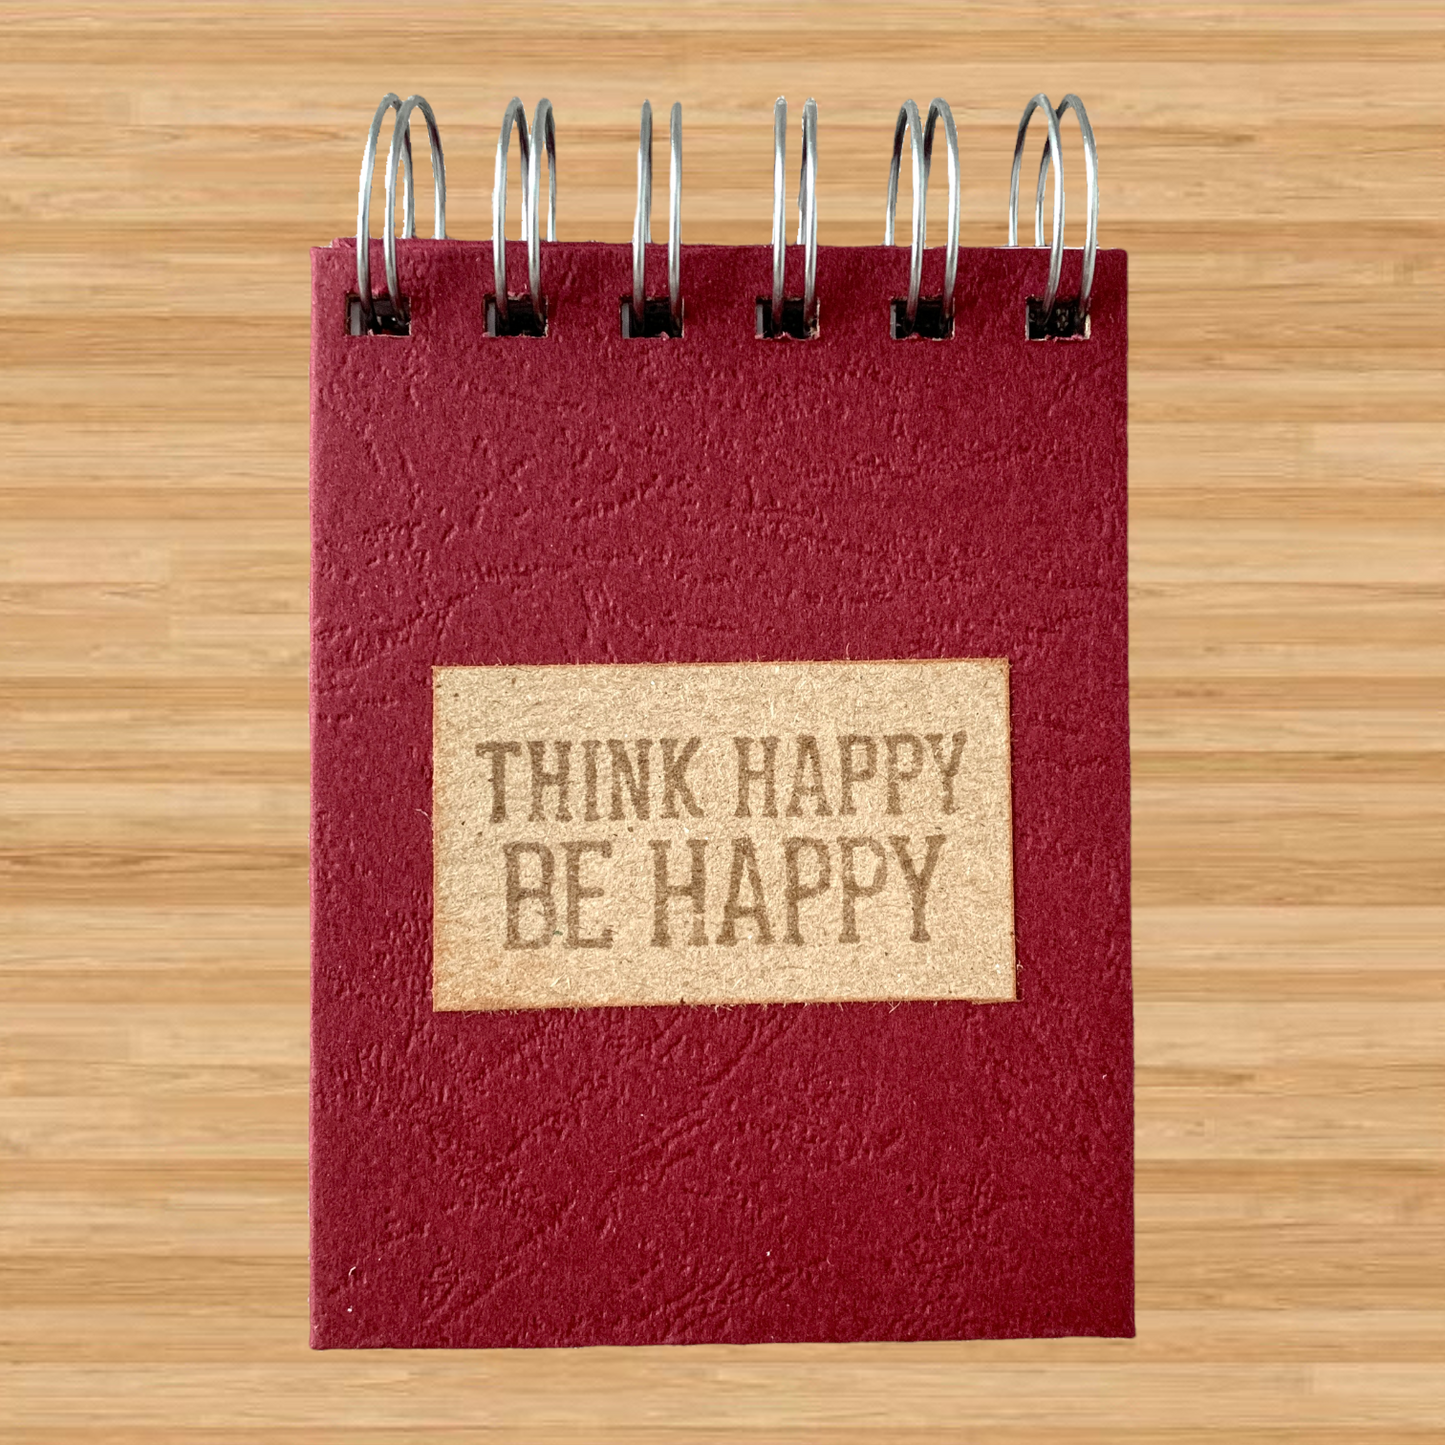 Think Happy Be Happy - Memo - Blank - Spiral Bound - Fountain Pen Notebook - Handmade Journal